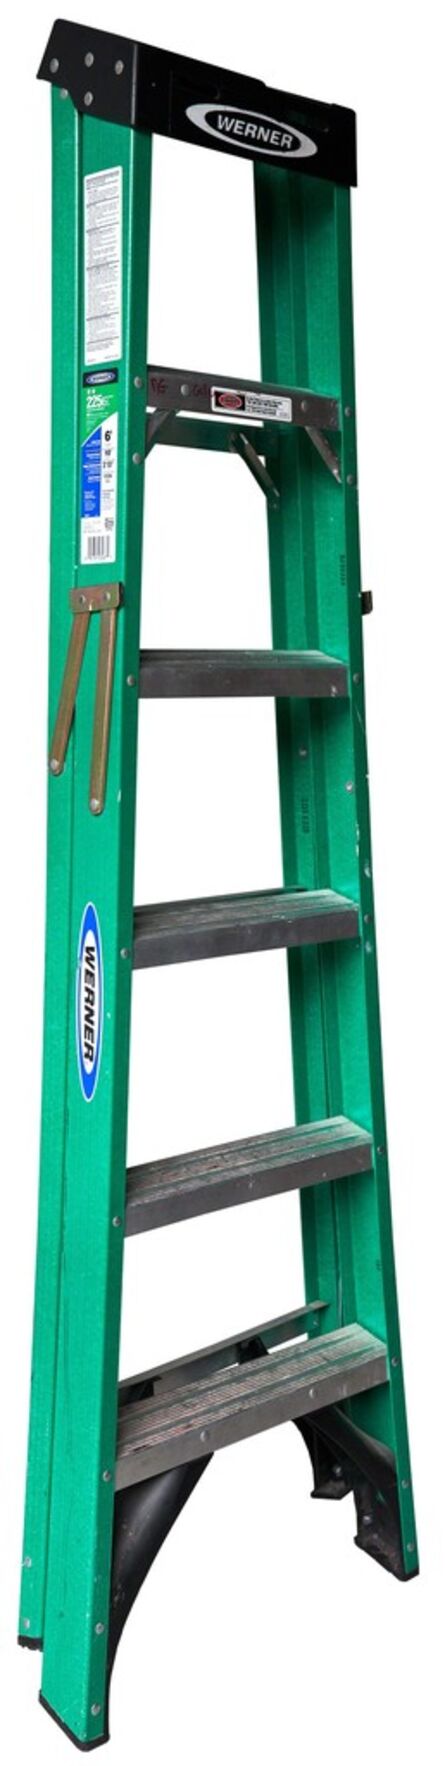 Jennifer Williams, ‘Medium Folding Ladder: Green with Black Top’, 2012